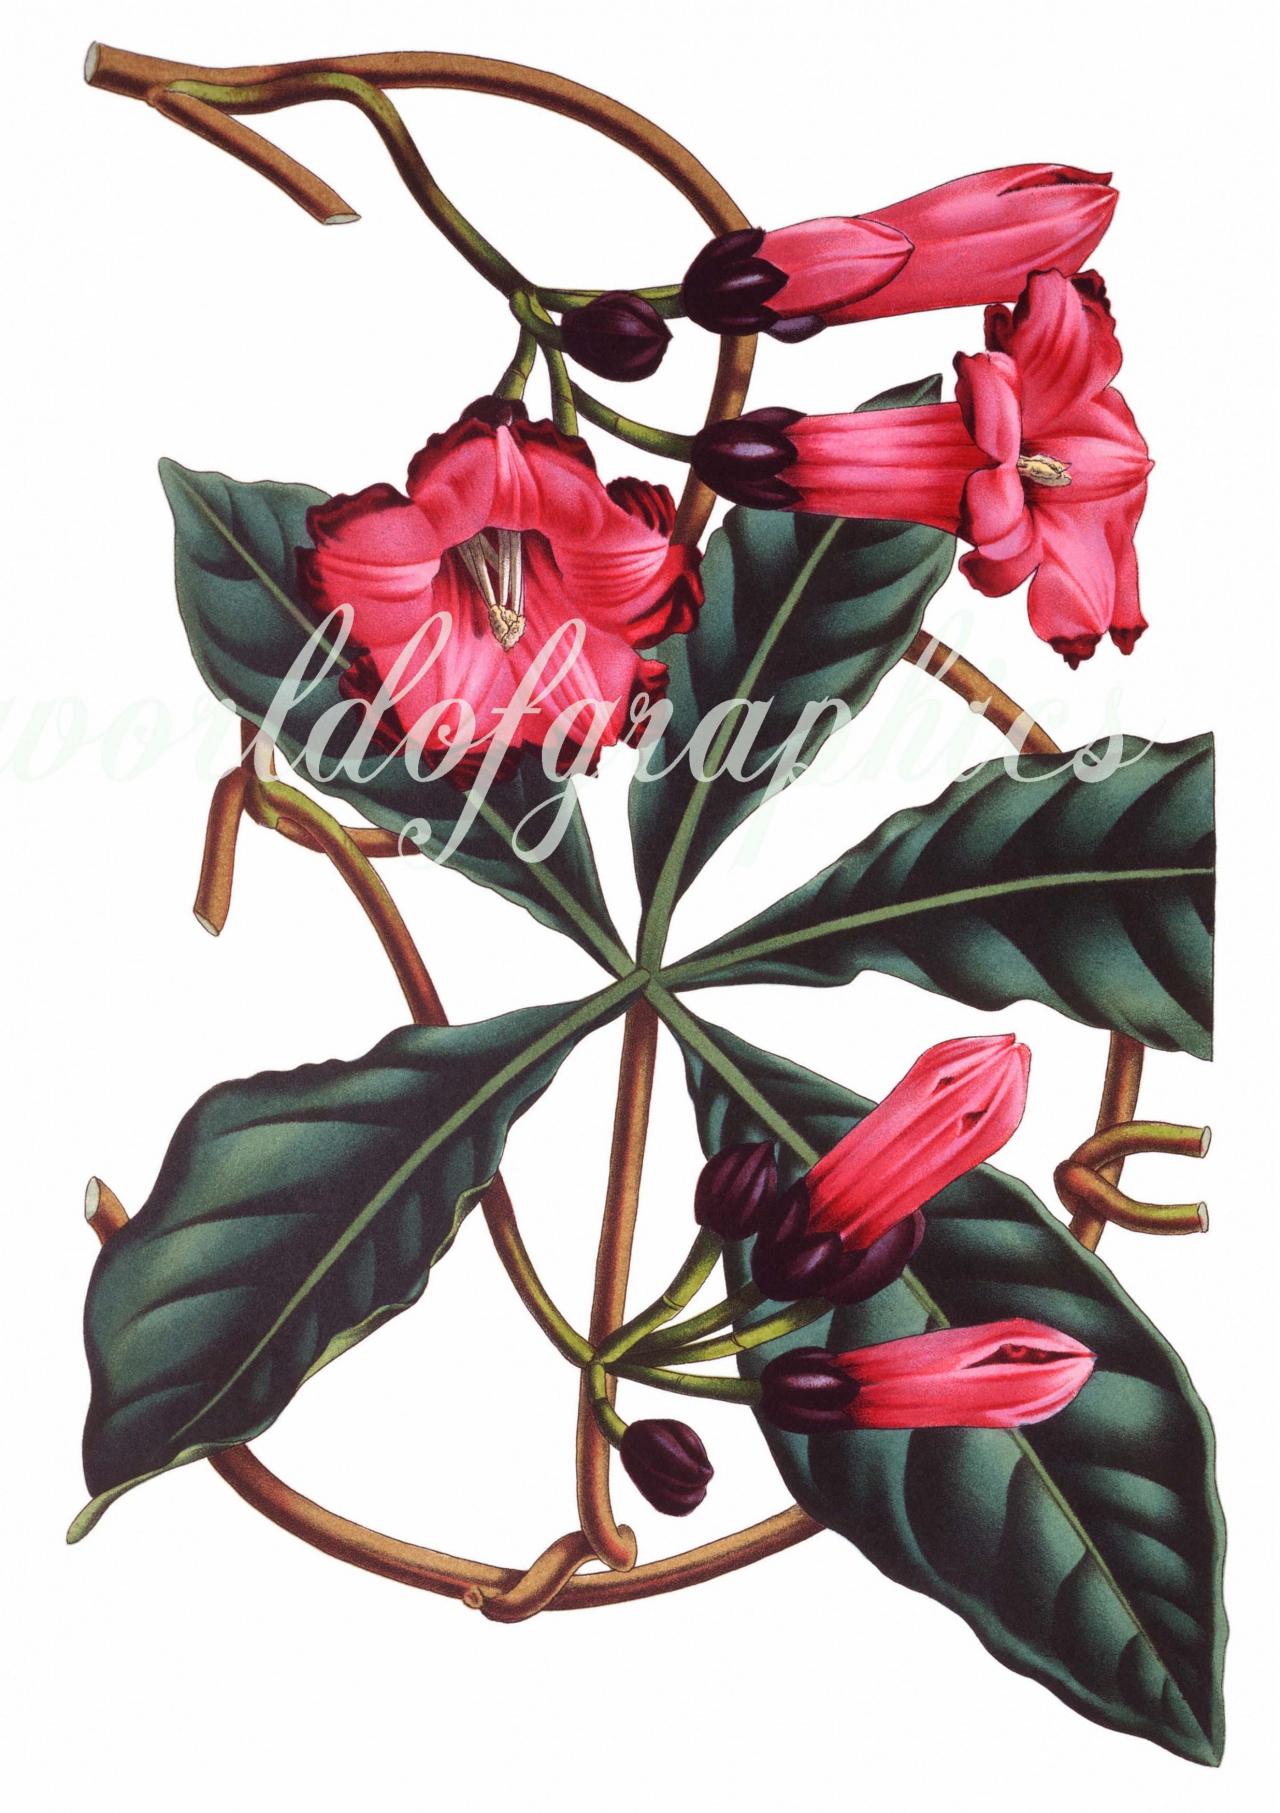 Antique Botanical Flower, Iron On Fabric, Transfer Burlap, Decoupage, Pillows Cards, Scrapbook-0023